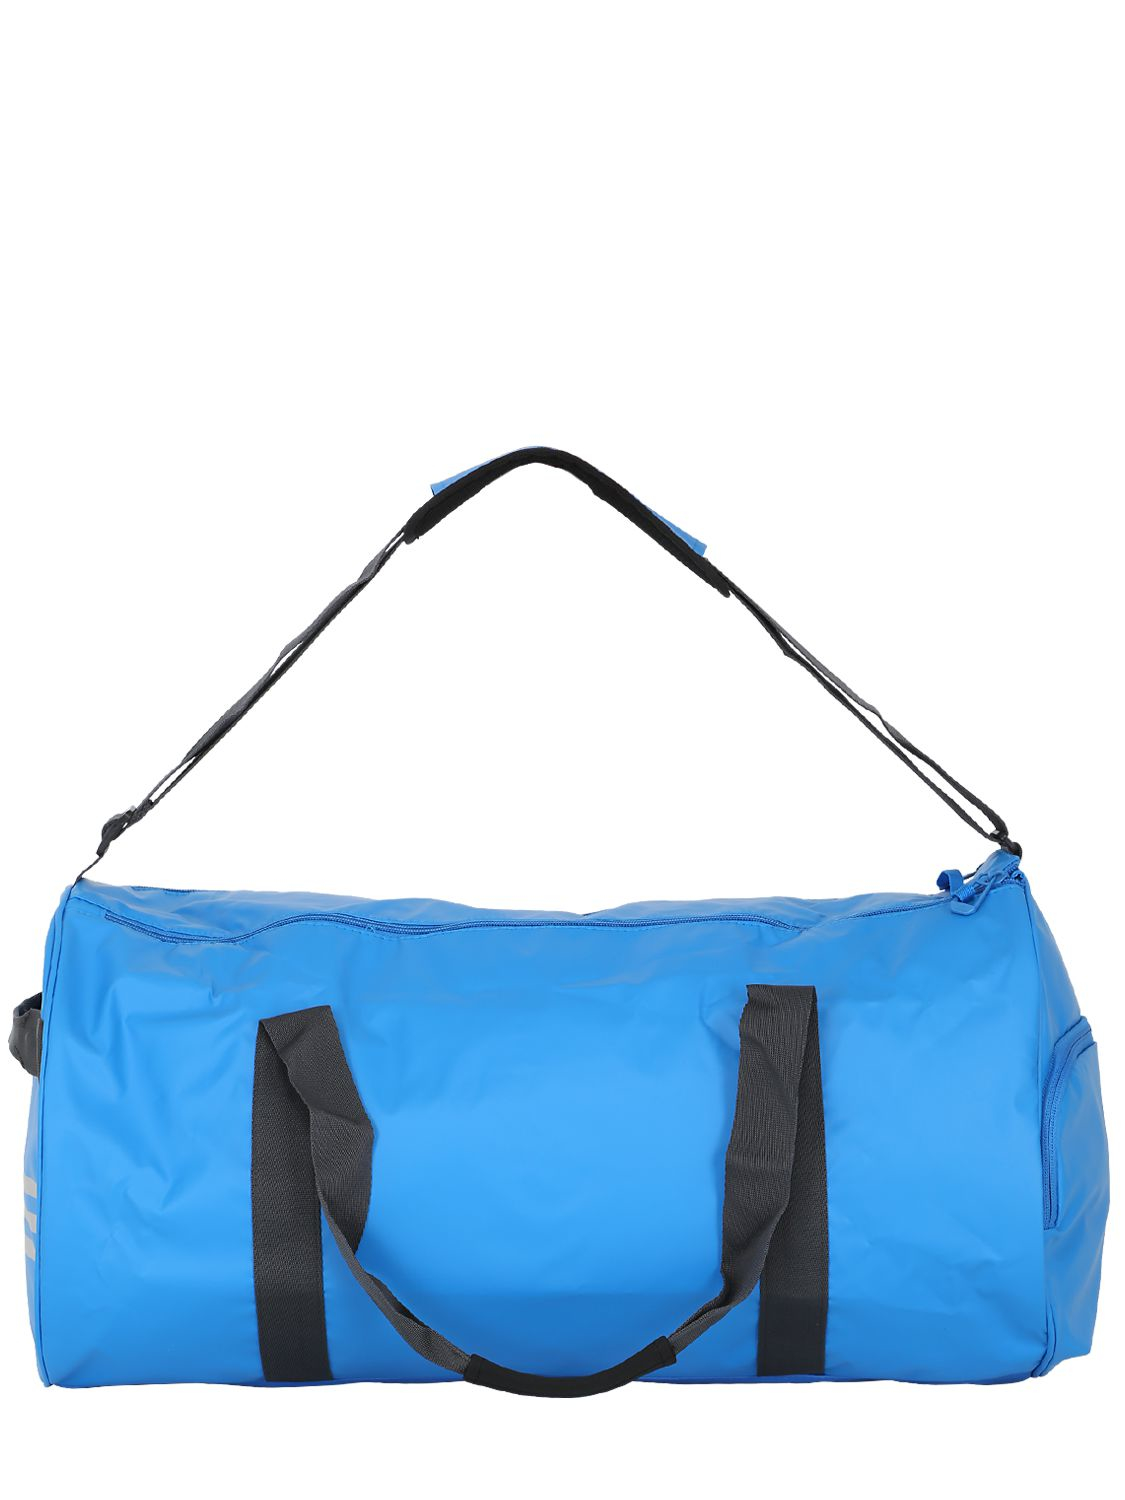 Lyst - Adidas Originals Water Repellent Coated Nylon Duffle Bag in Blue for Men